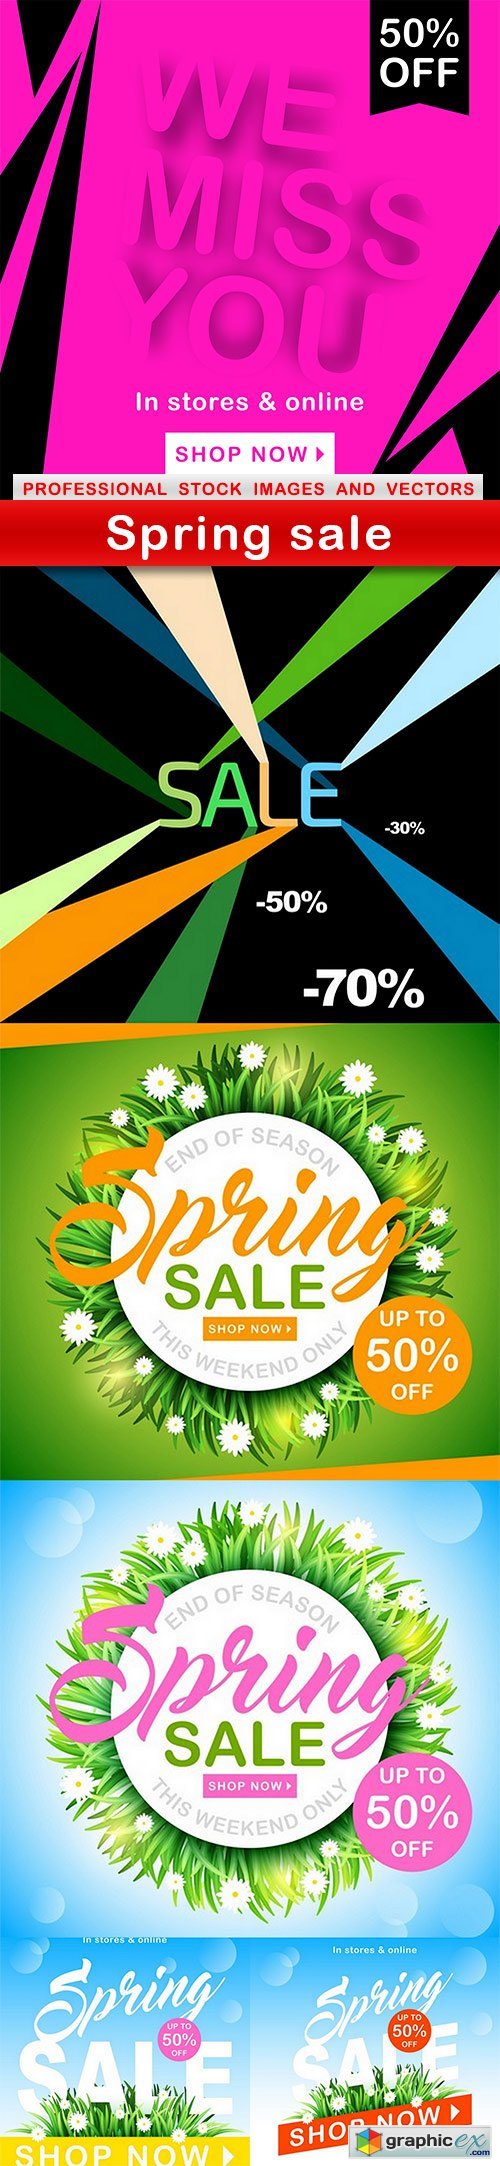 Spring sale - 6 EPS